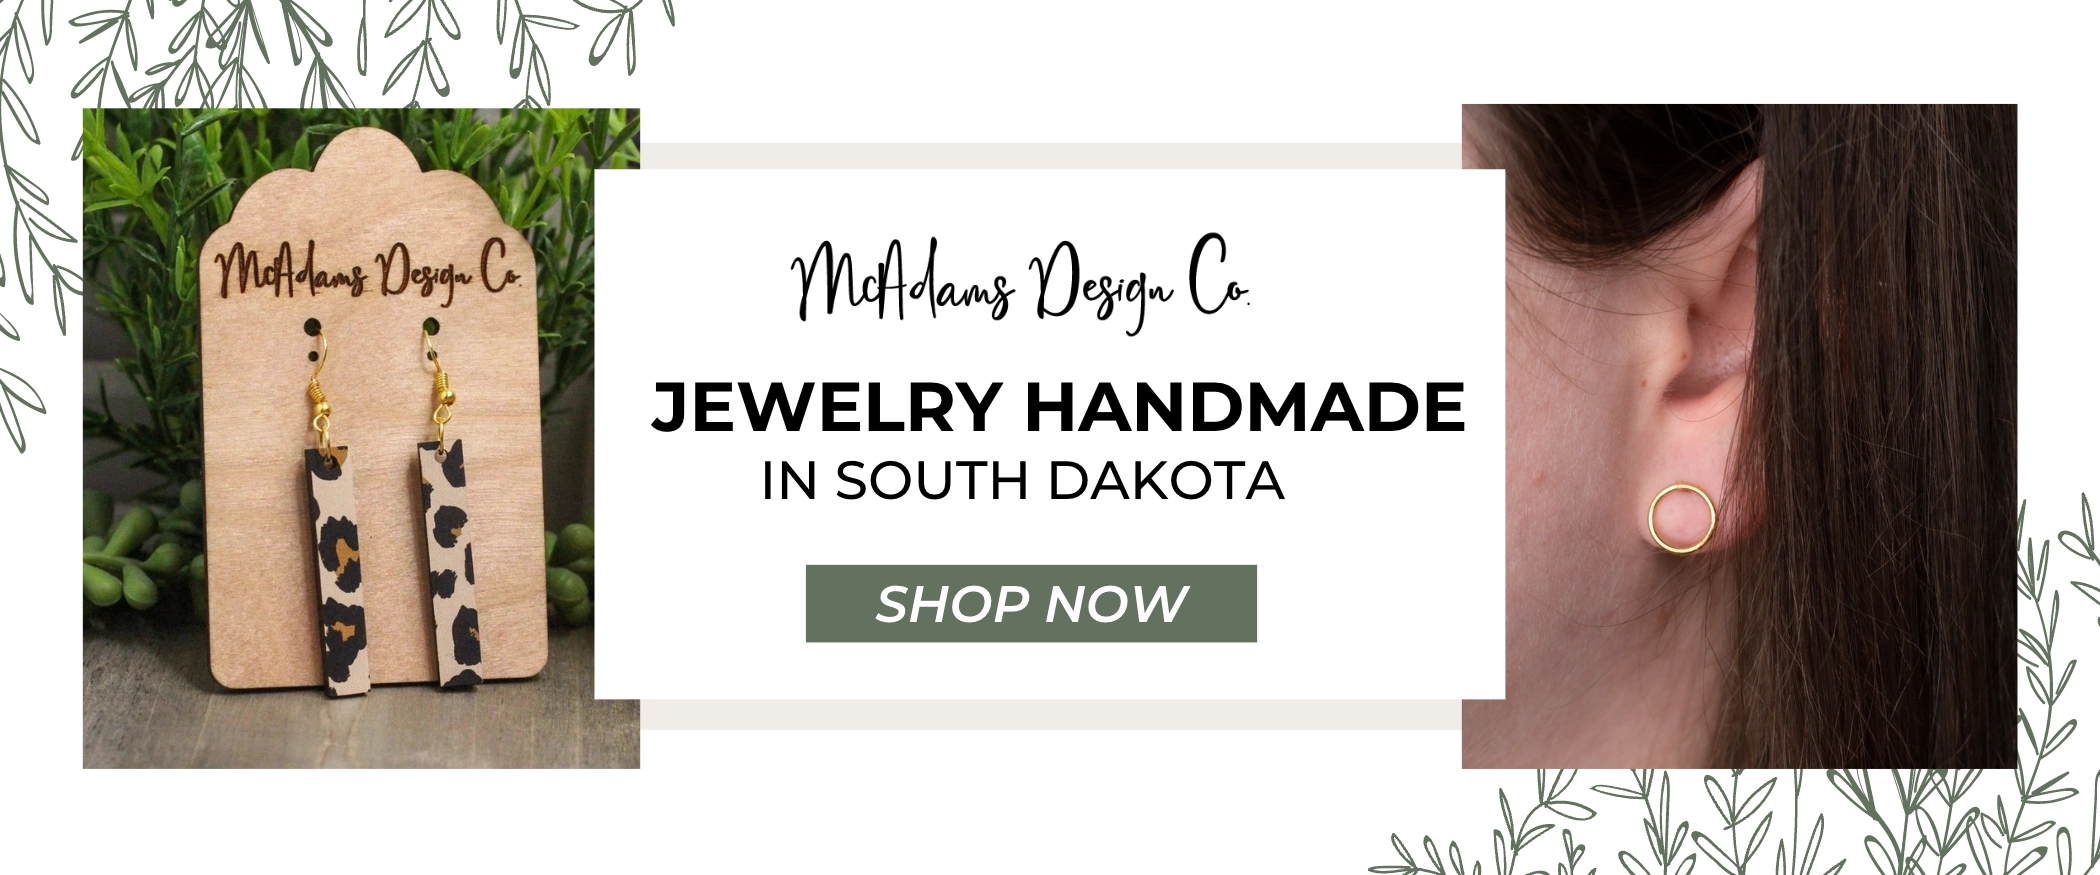 McAdams Design Co jewelry handmade in South Dakota.  Visit website.